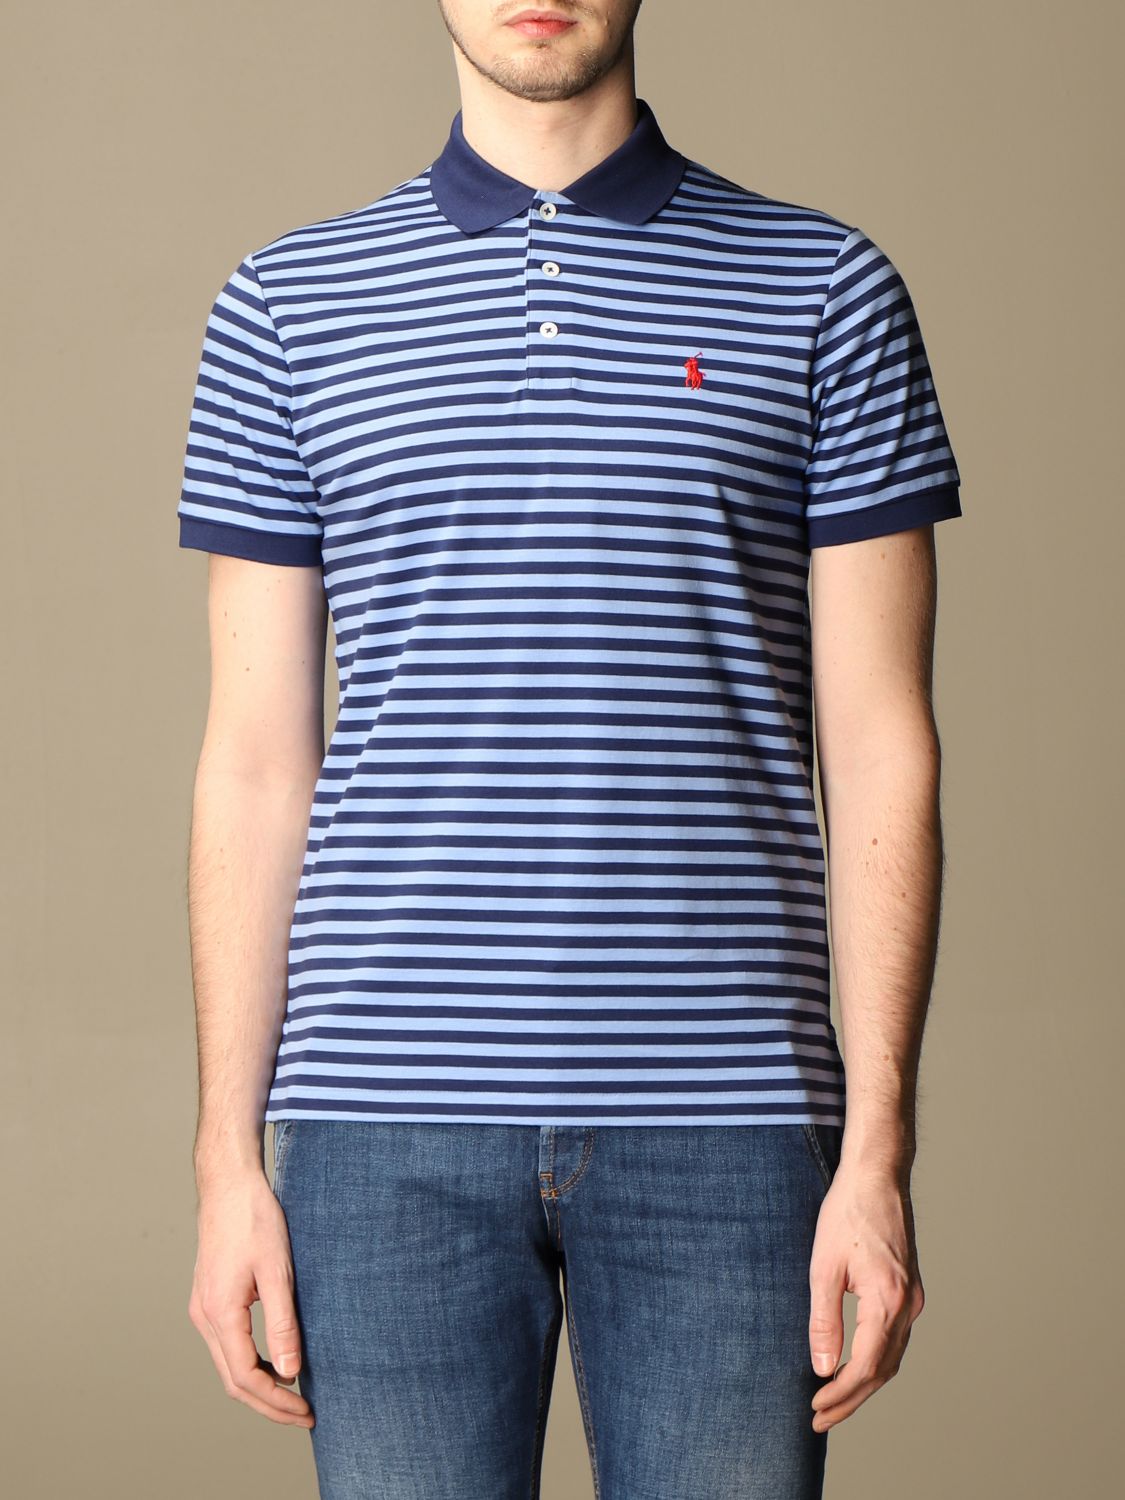 POLO RALPH LAUREN: striped cotton polo shirt - Blue | Polo Ralph Lauren t- shirt 710830550 online on 